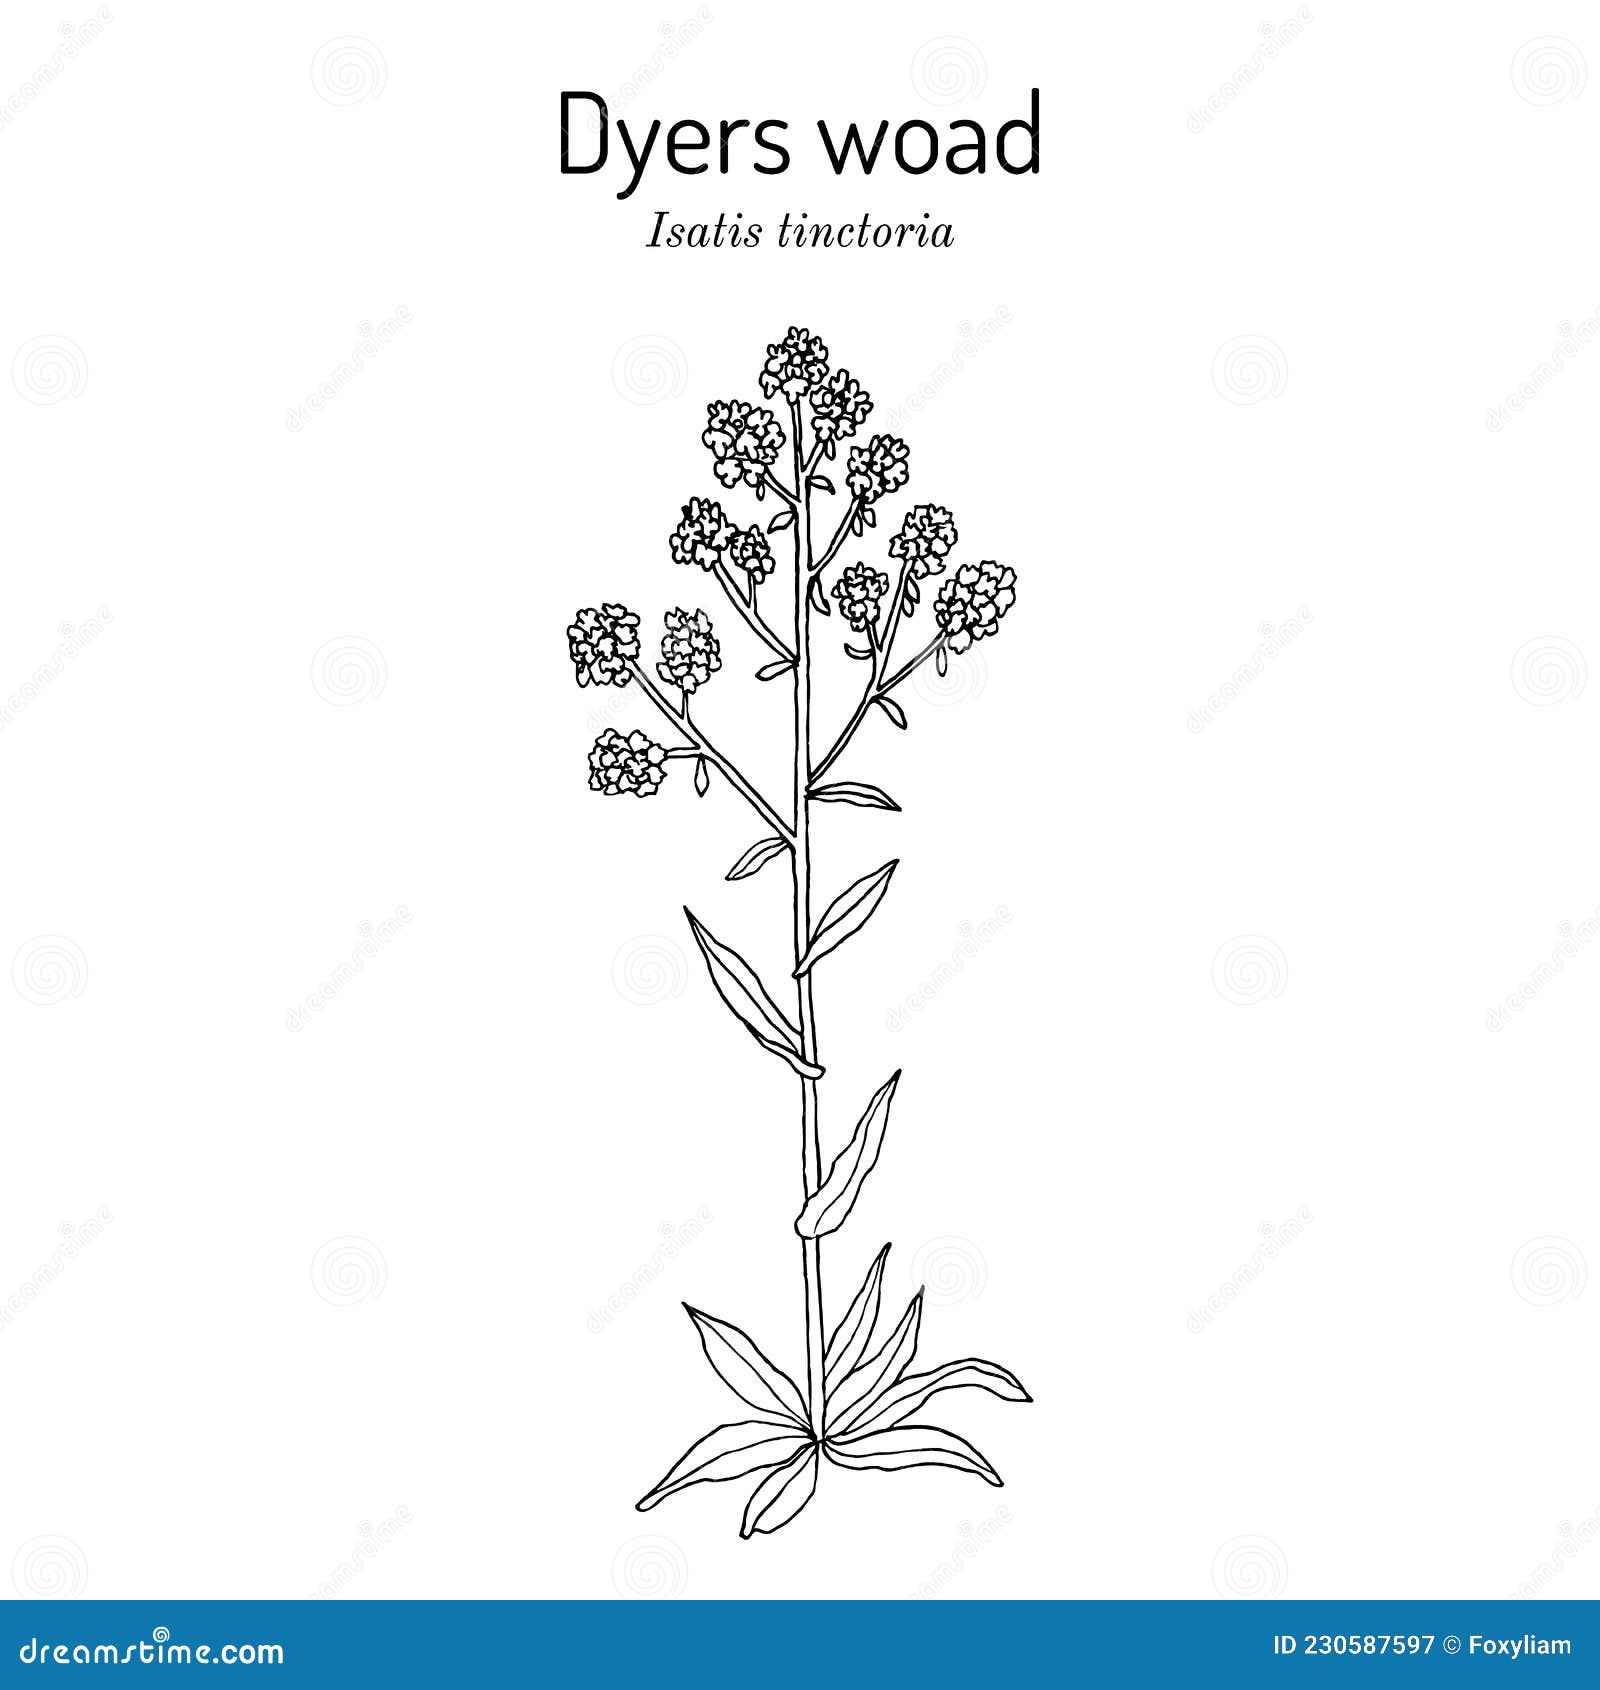 dyers woad, or glastum isatis tinctoria , medicinal plant